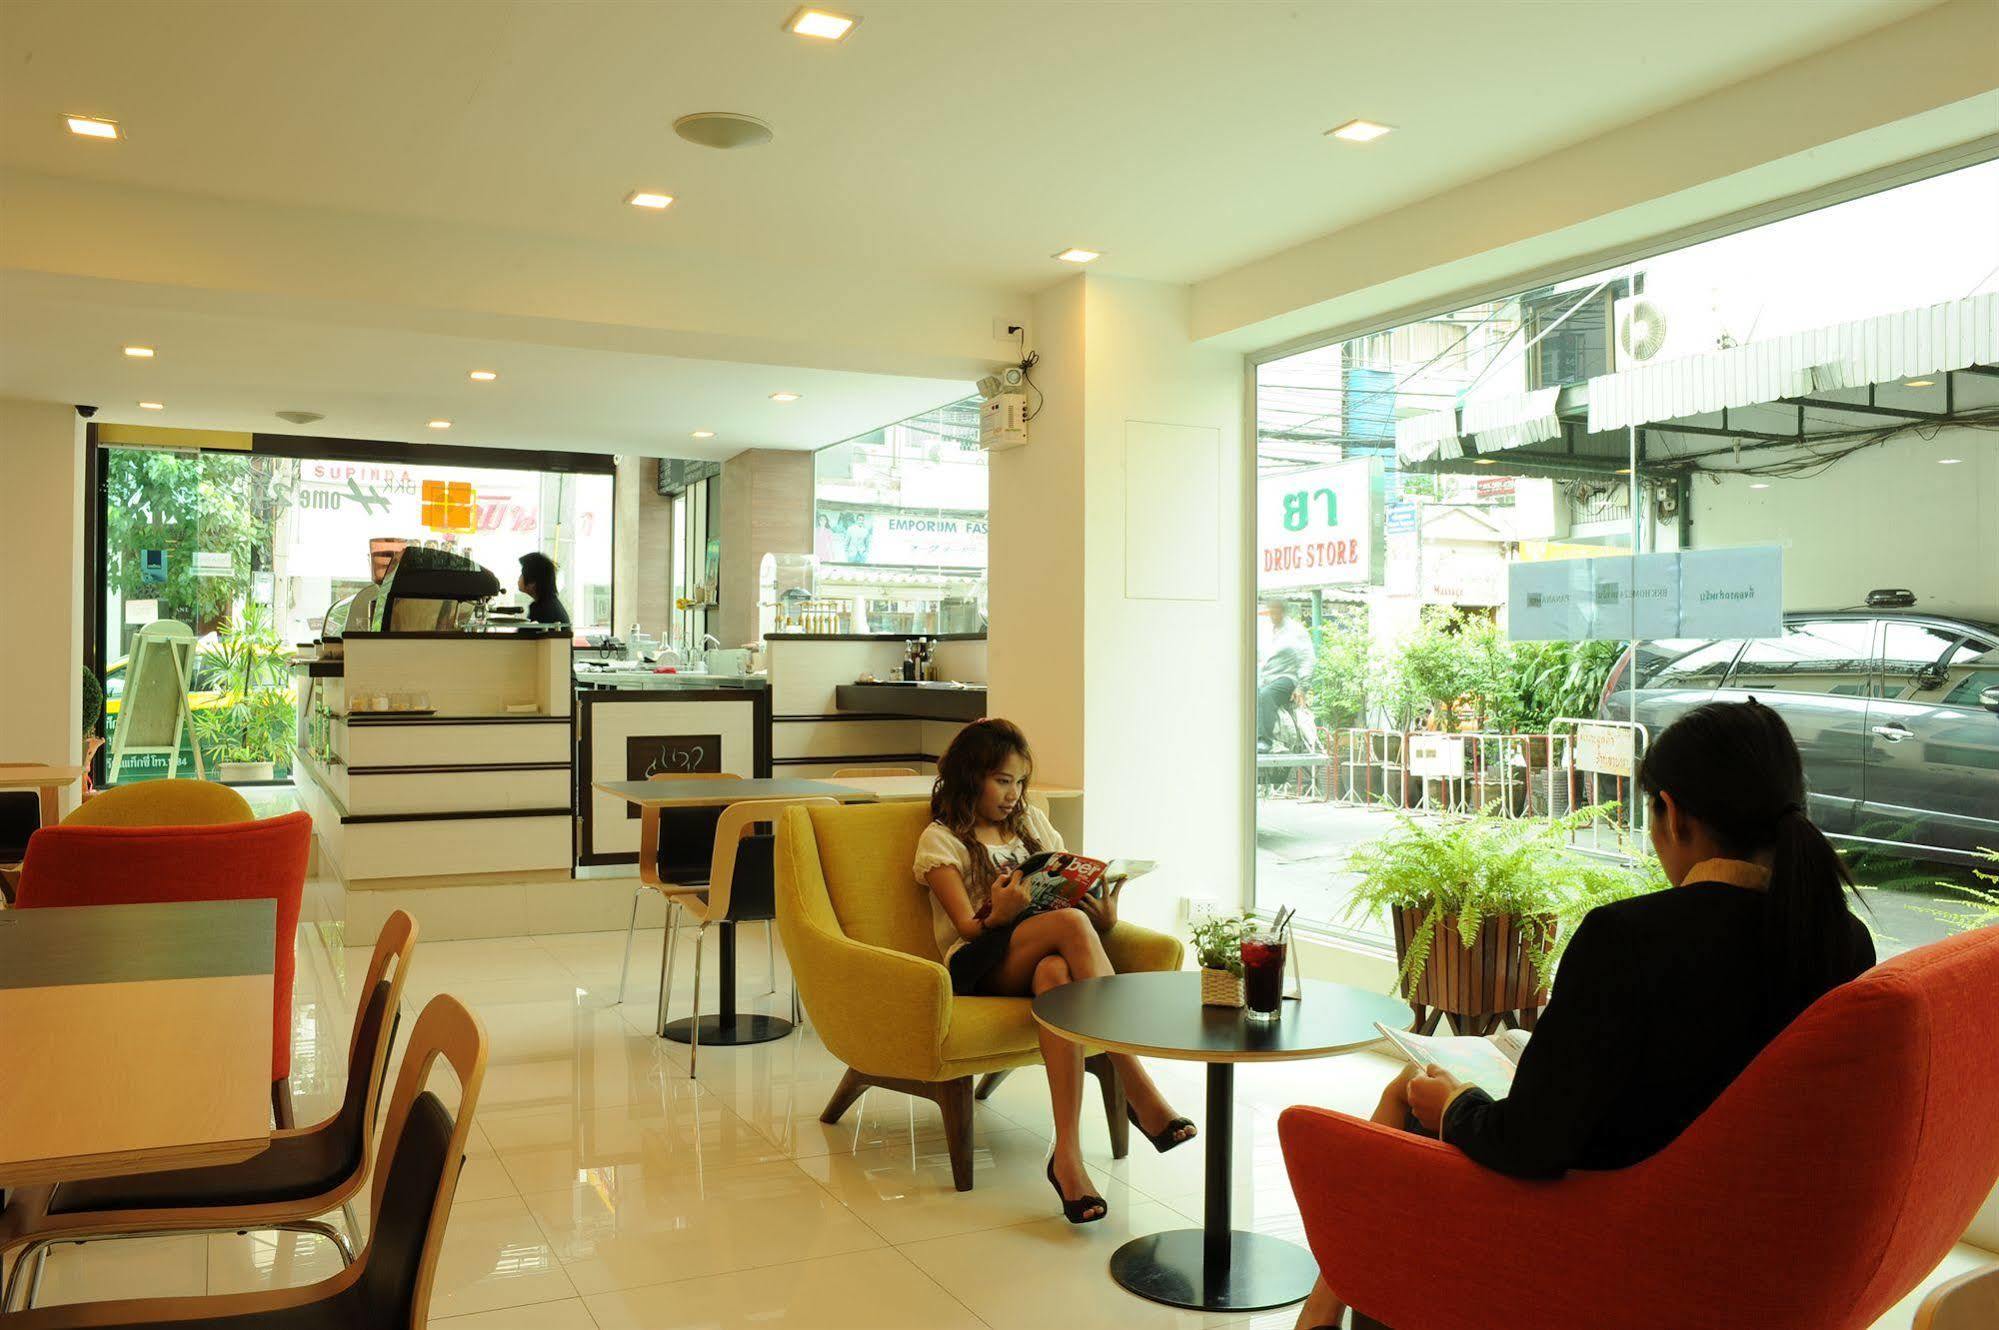 Bkk Home 24 Boutique Hotel Бангкок Экстерьер фото